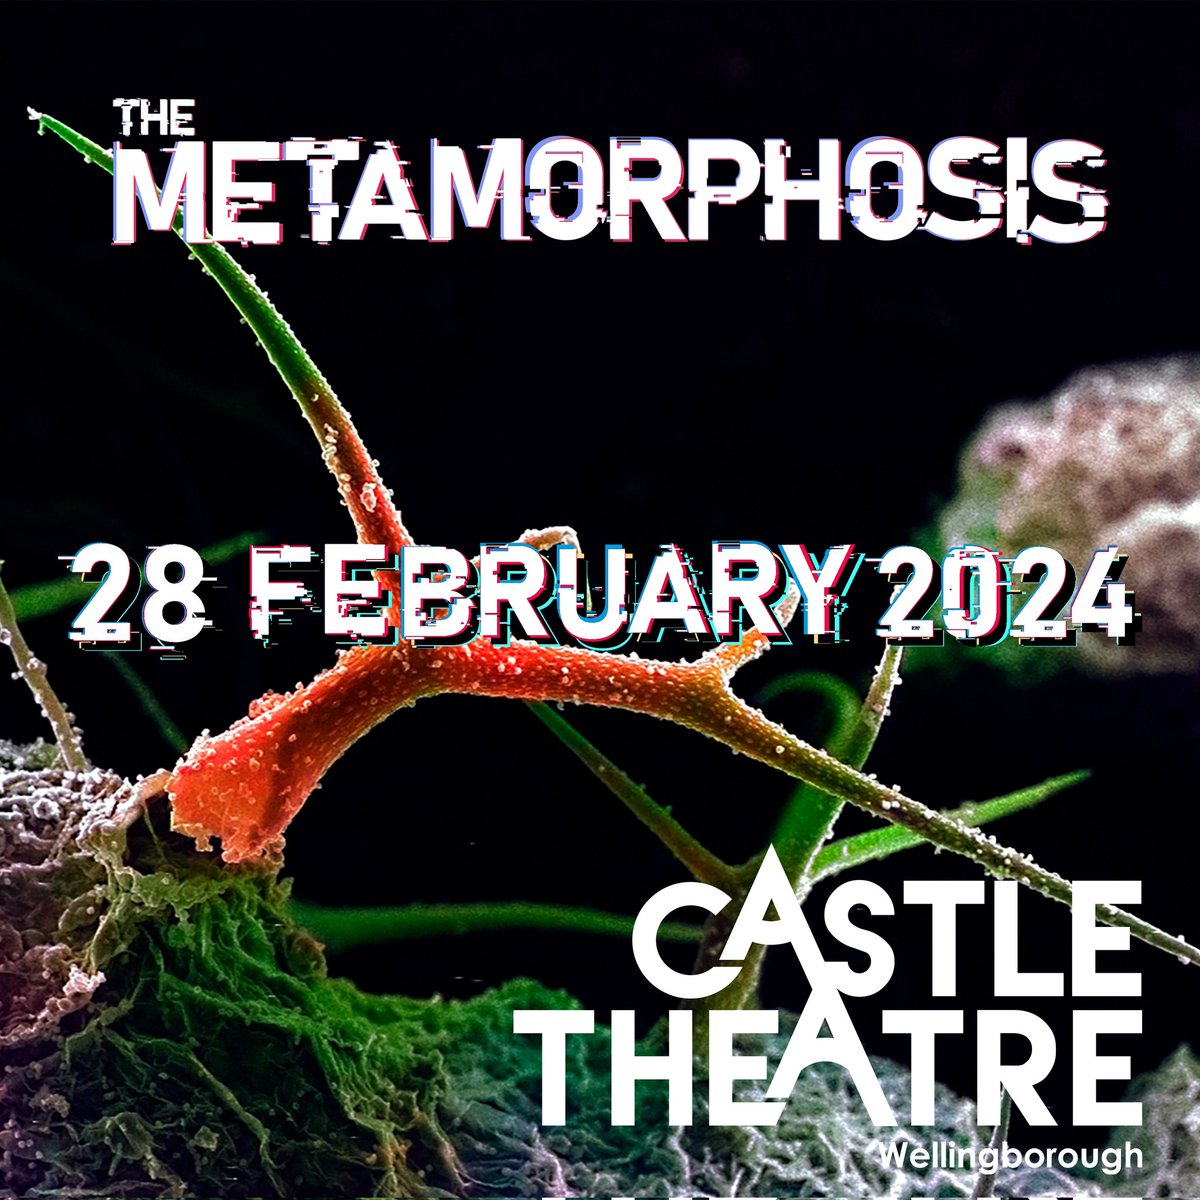 Tonight! At the Castle Theatre, Wellingborough @castletheatrewel The Metamorphosis starts at 7.30pm

Tickets on sale now

mildperiltheatre.co.uk/Tour-dates/

#theatre #kafka #themetamorphosis #drama #independenttheatre #theatreproduction  #touringtheatre  #whatsontheatre  #tourdates